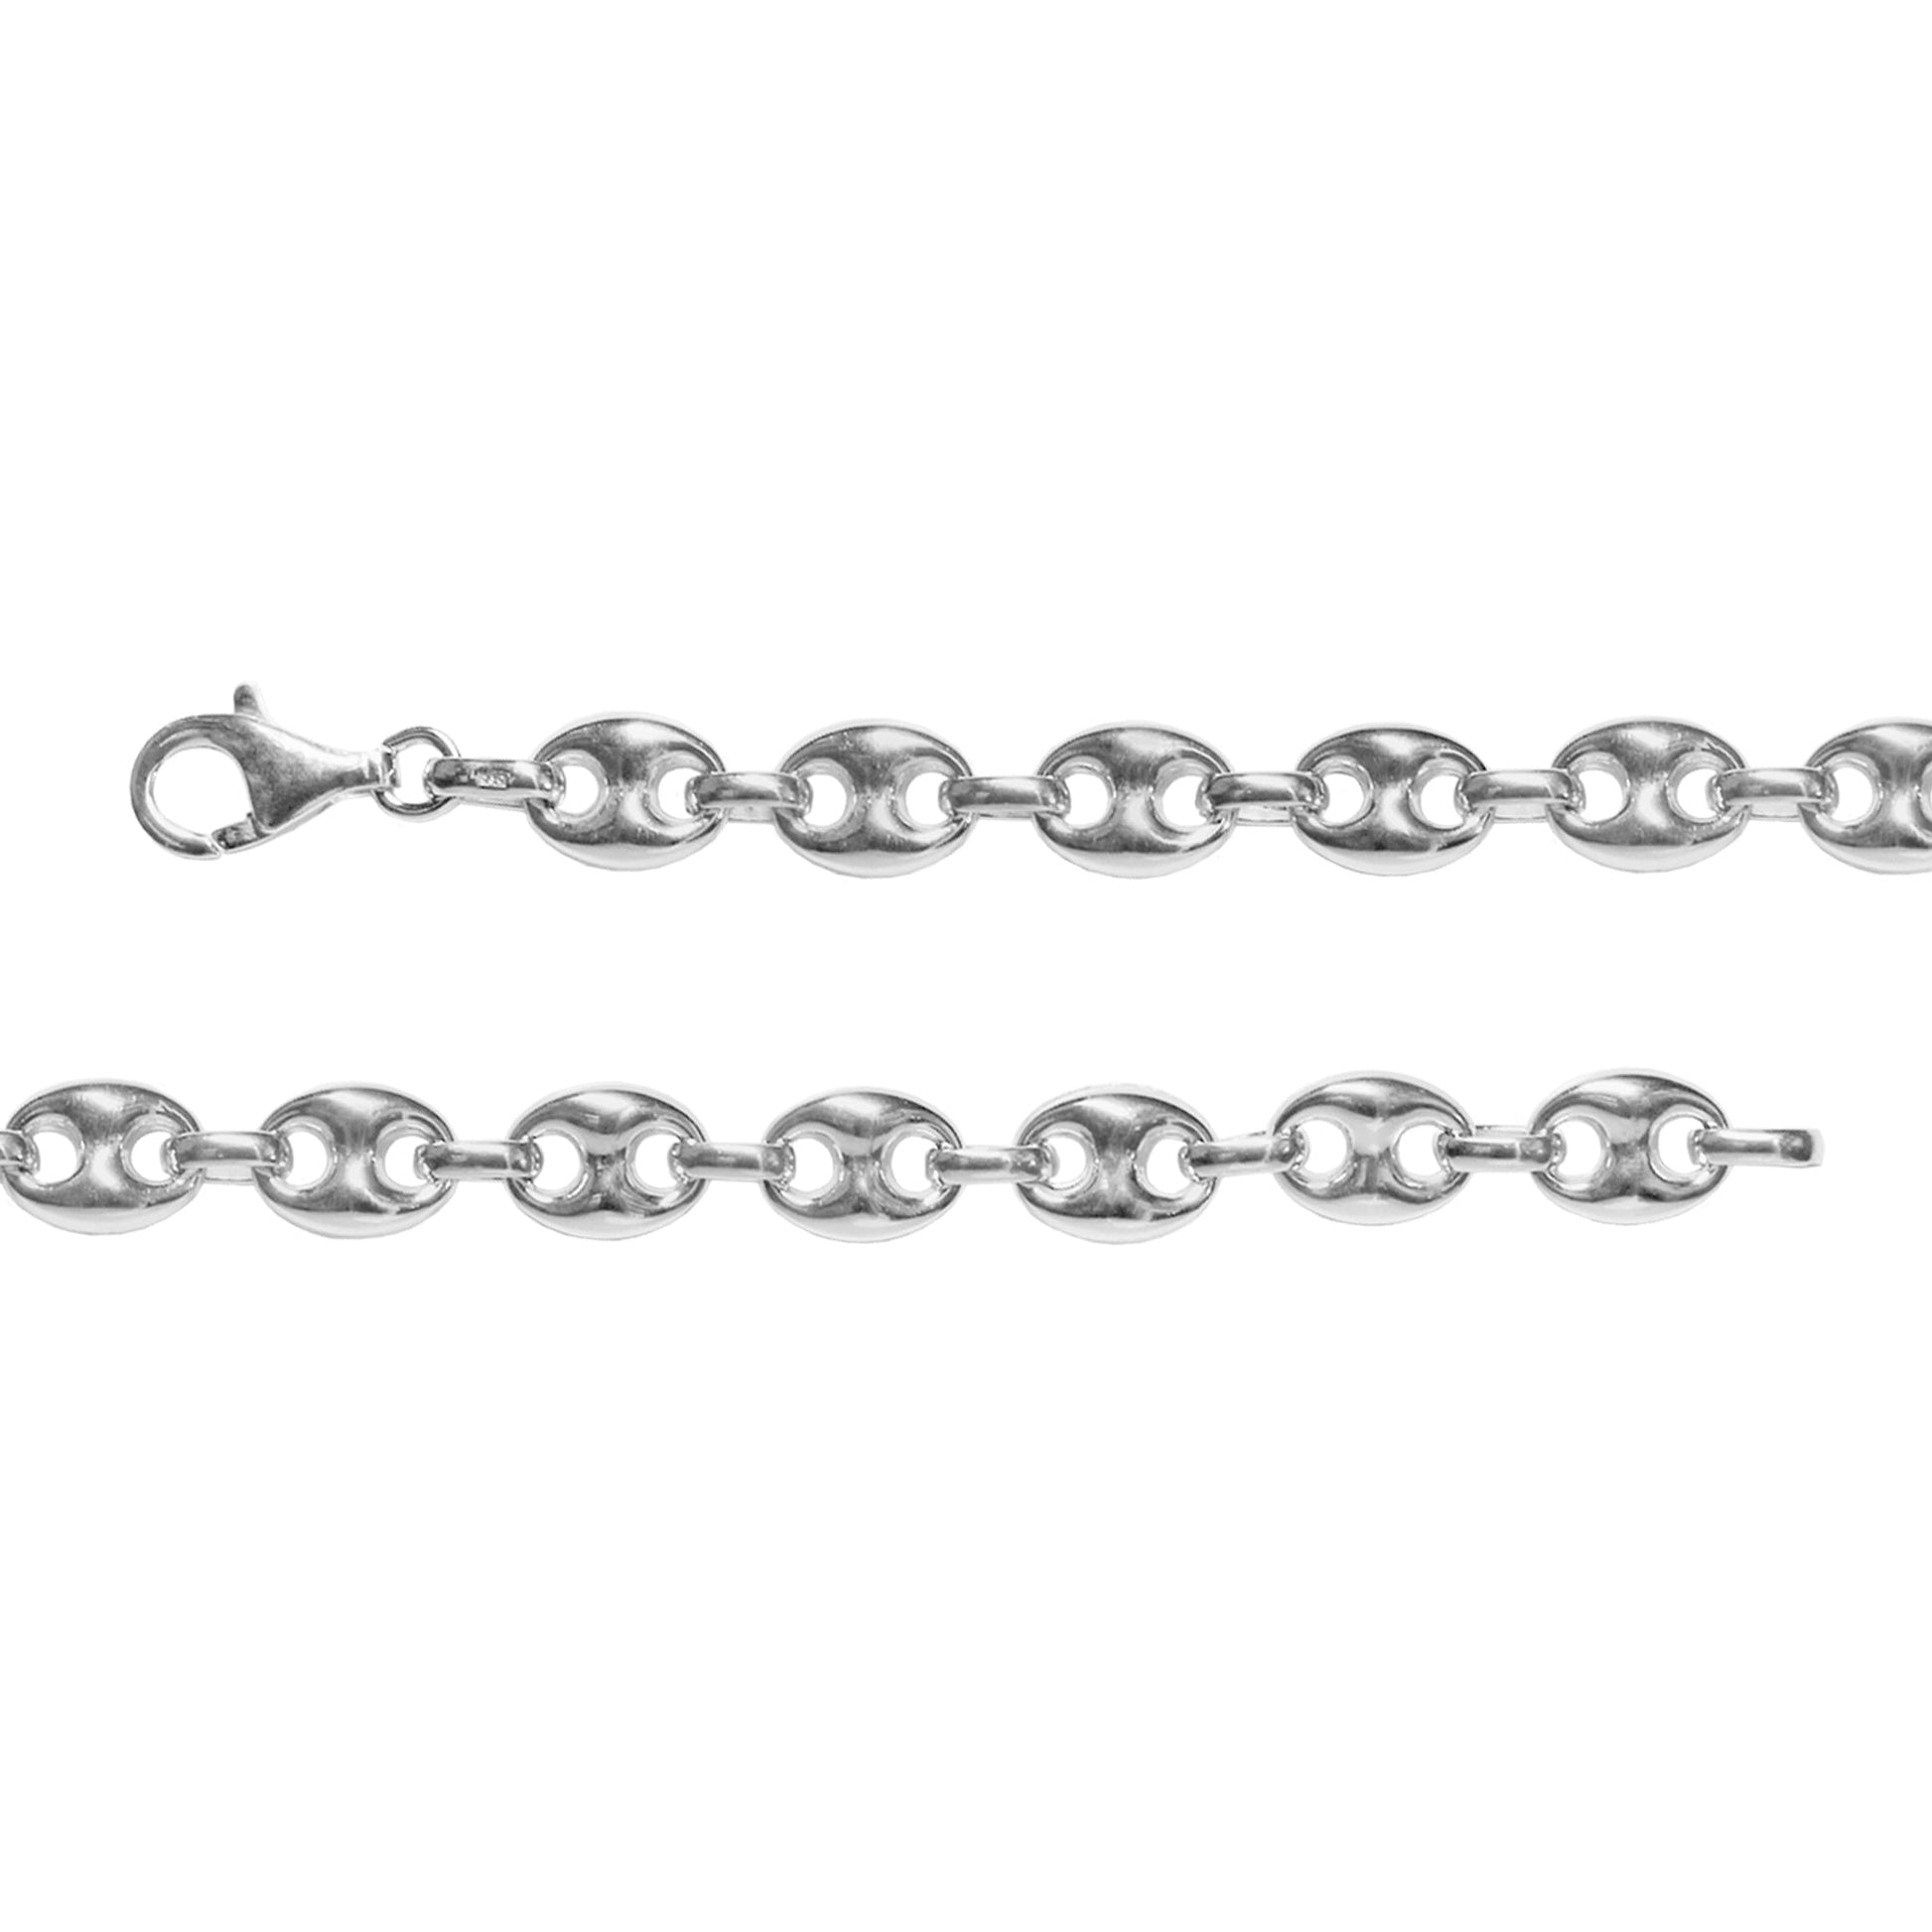 Franco Stellari Italian Sterling Silver Puffed Mariner Link Bracelet, 7.5"